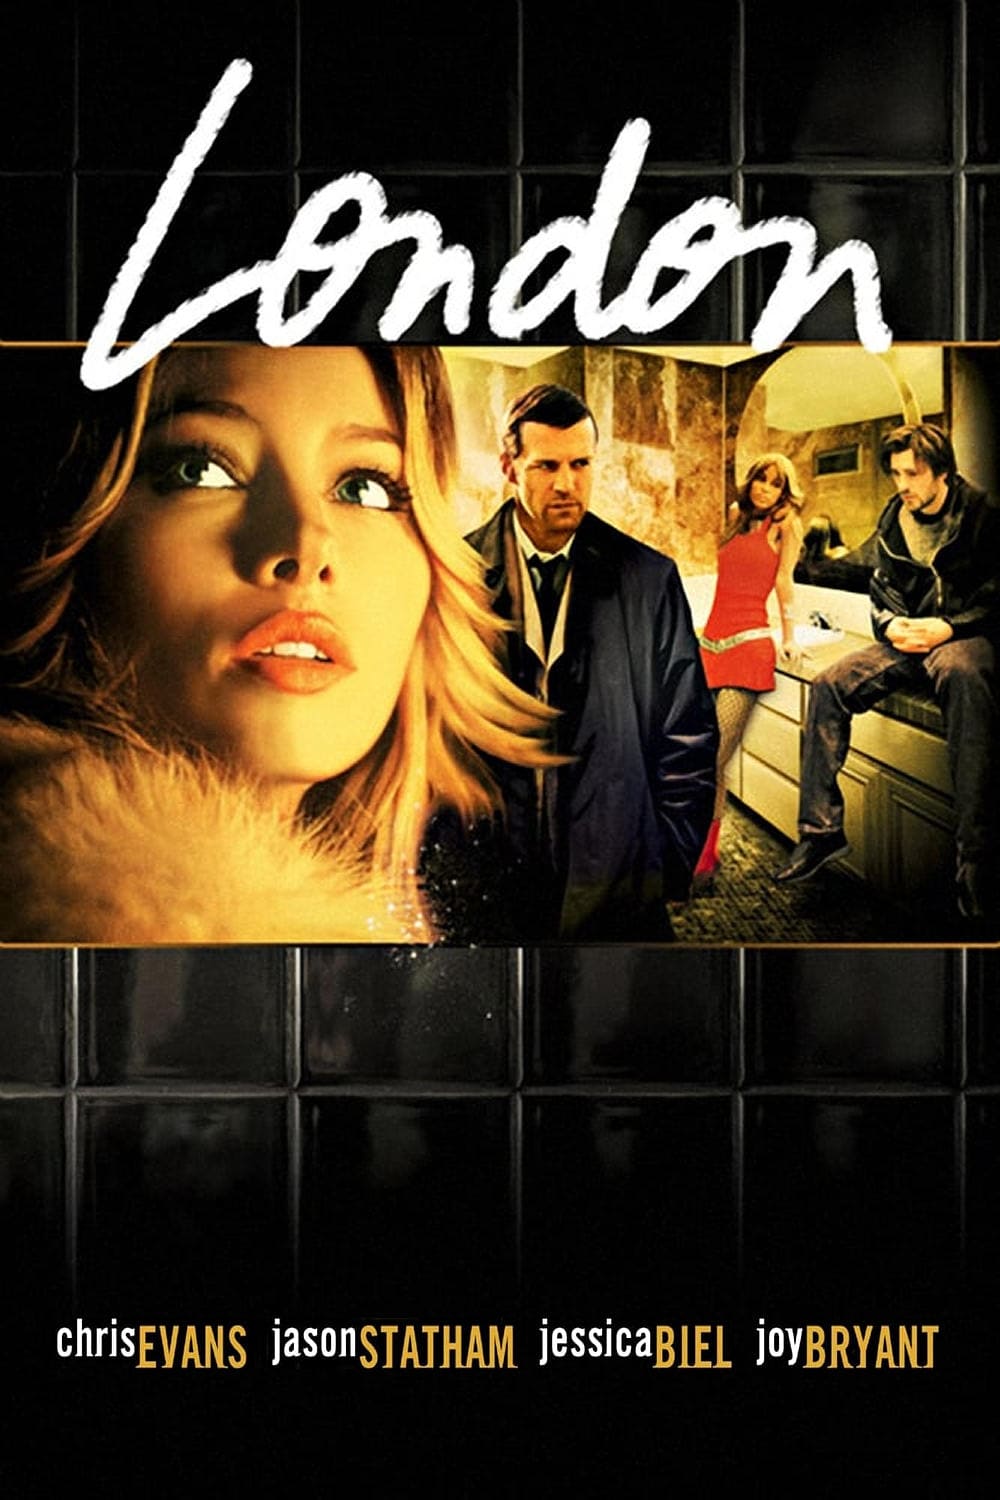 London [HD] (2005)